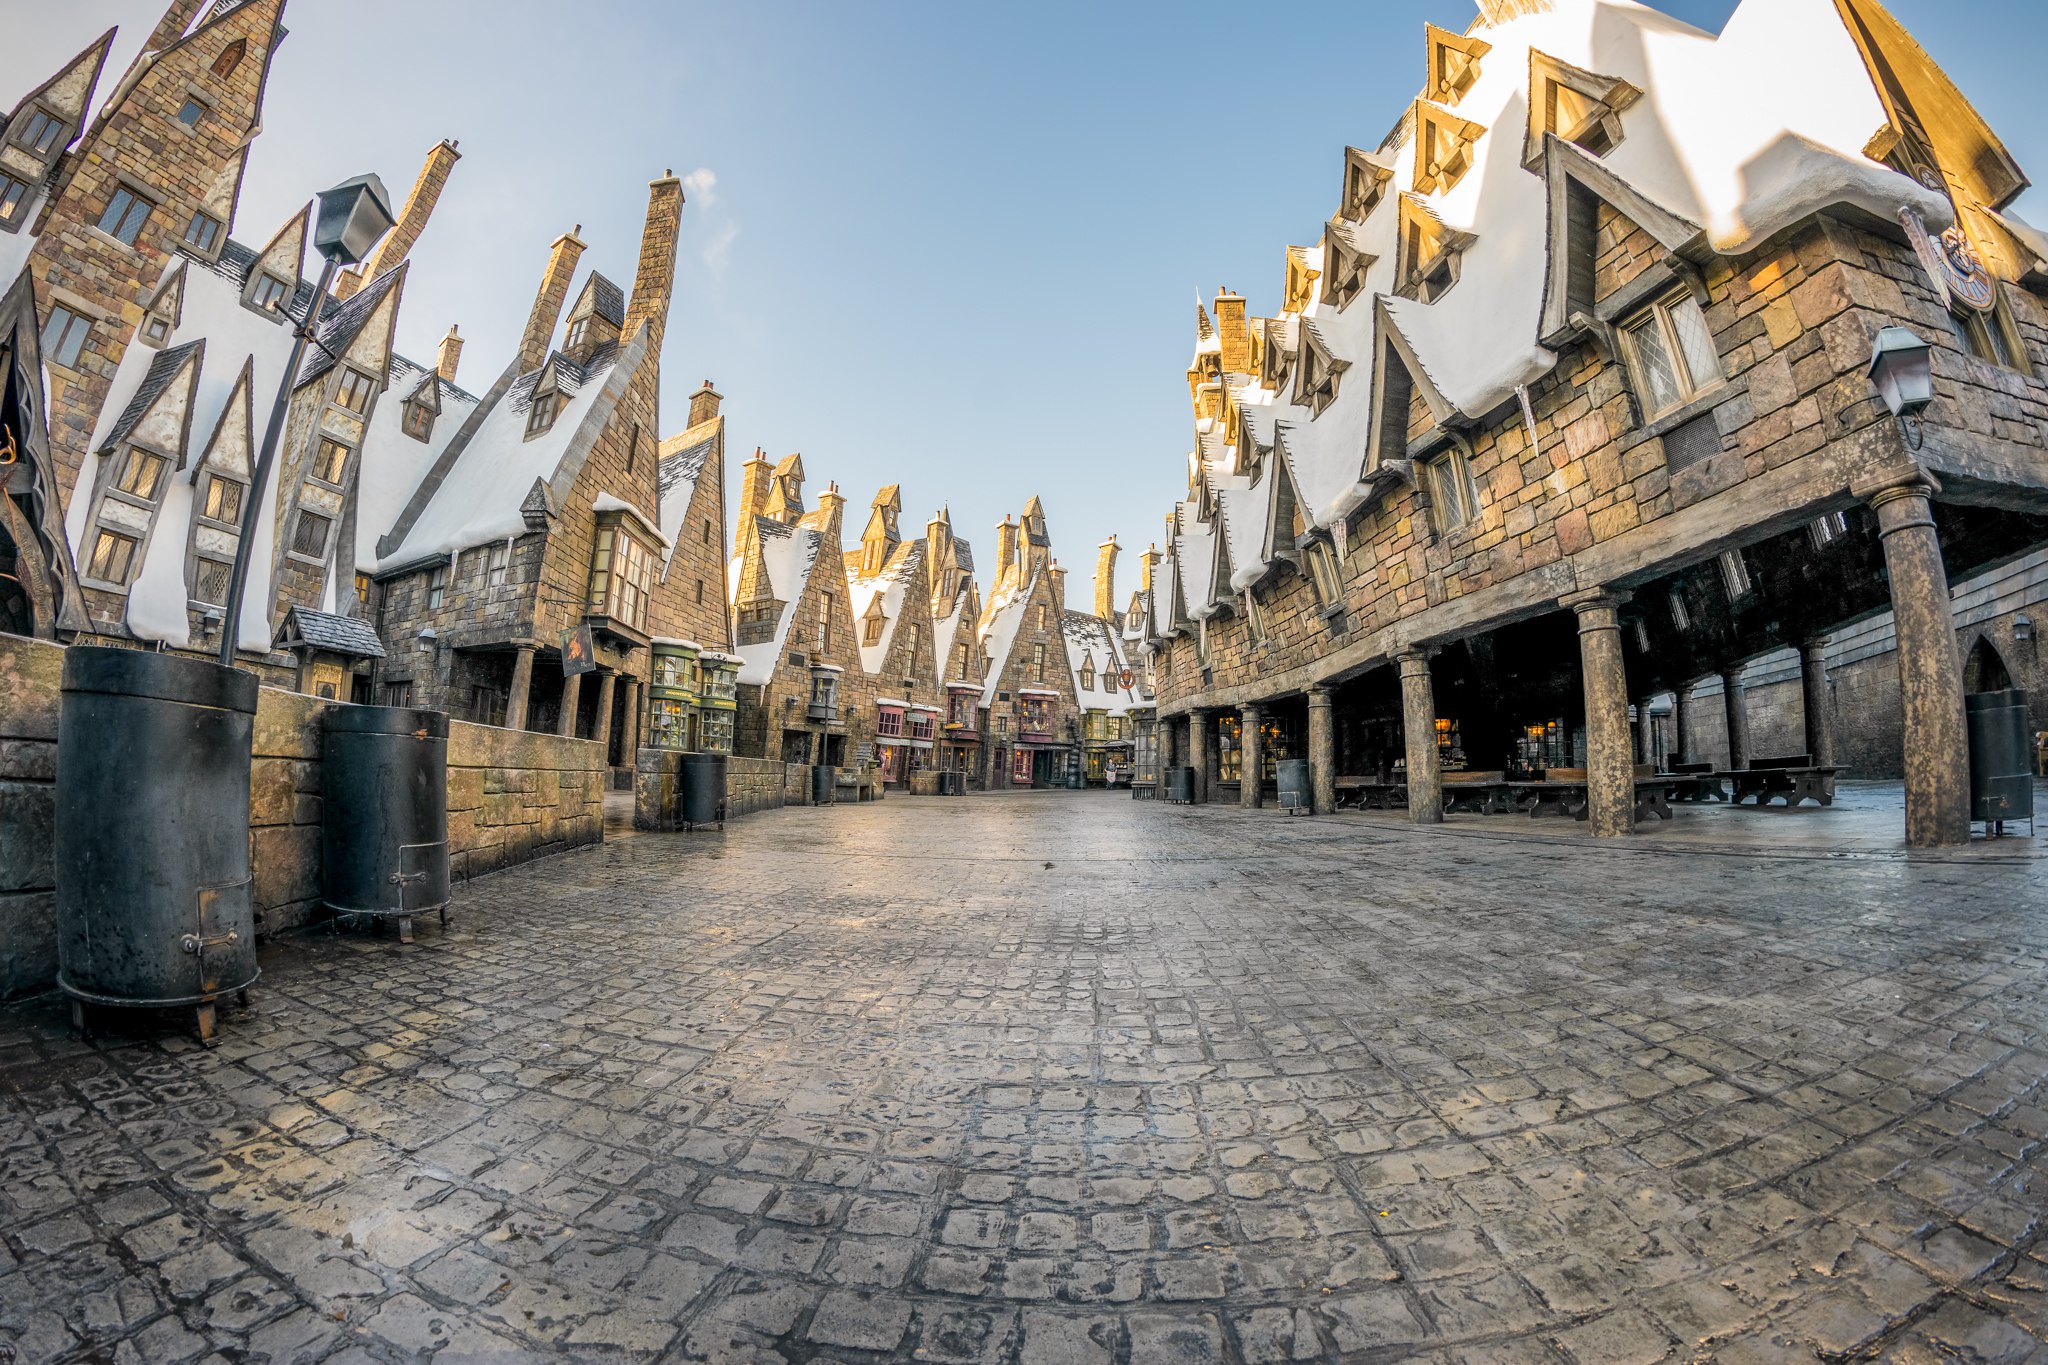 6 empty sunrise photos of the Wizarding World of Harry Potter